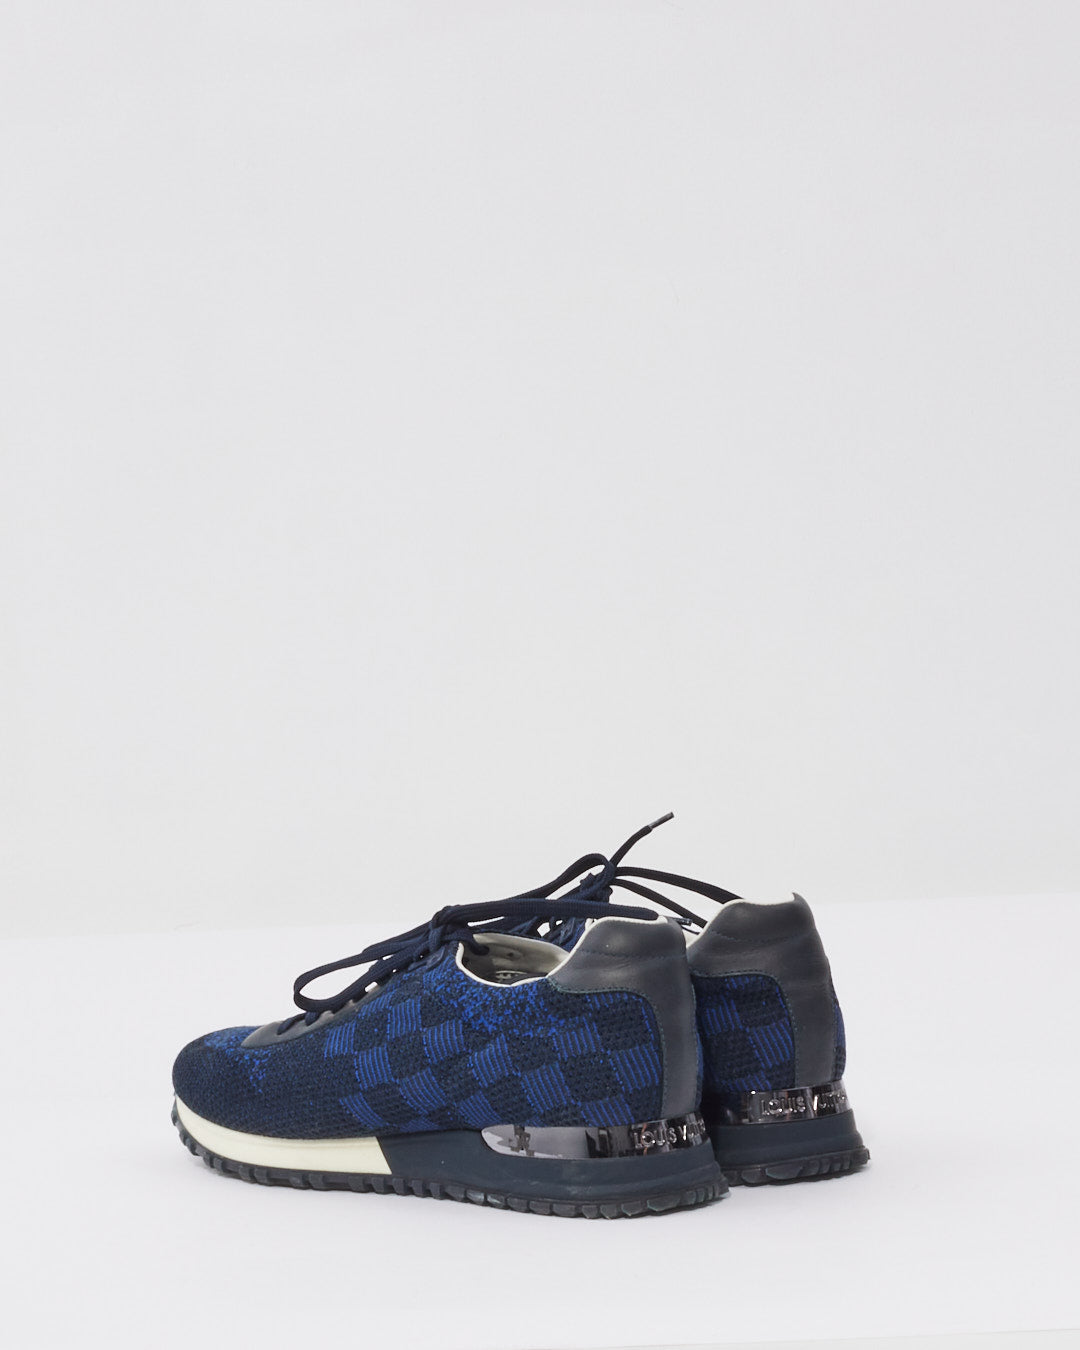 Louis Vuitton Navy/Black Damier Print Sneakers - 6 Men